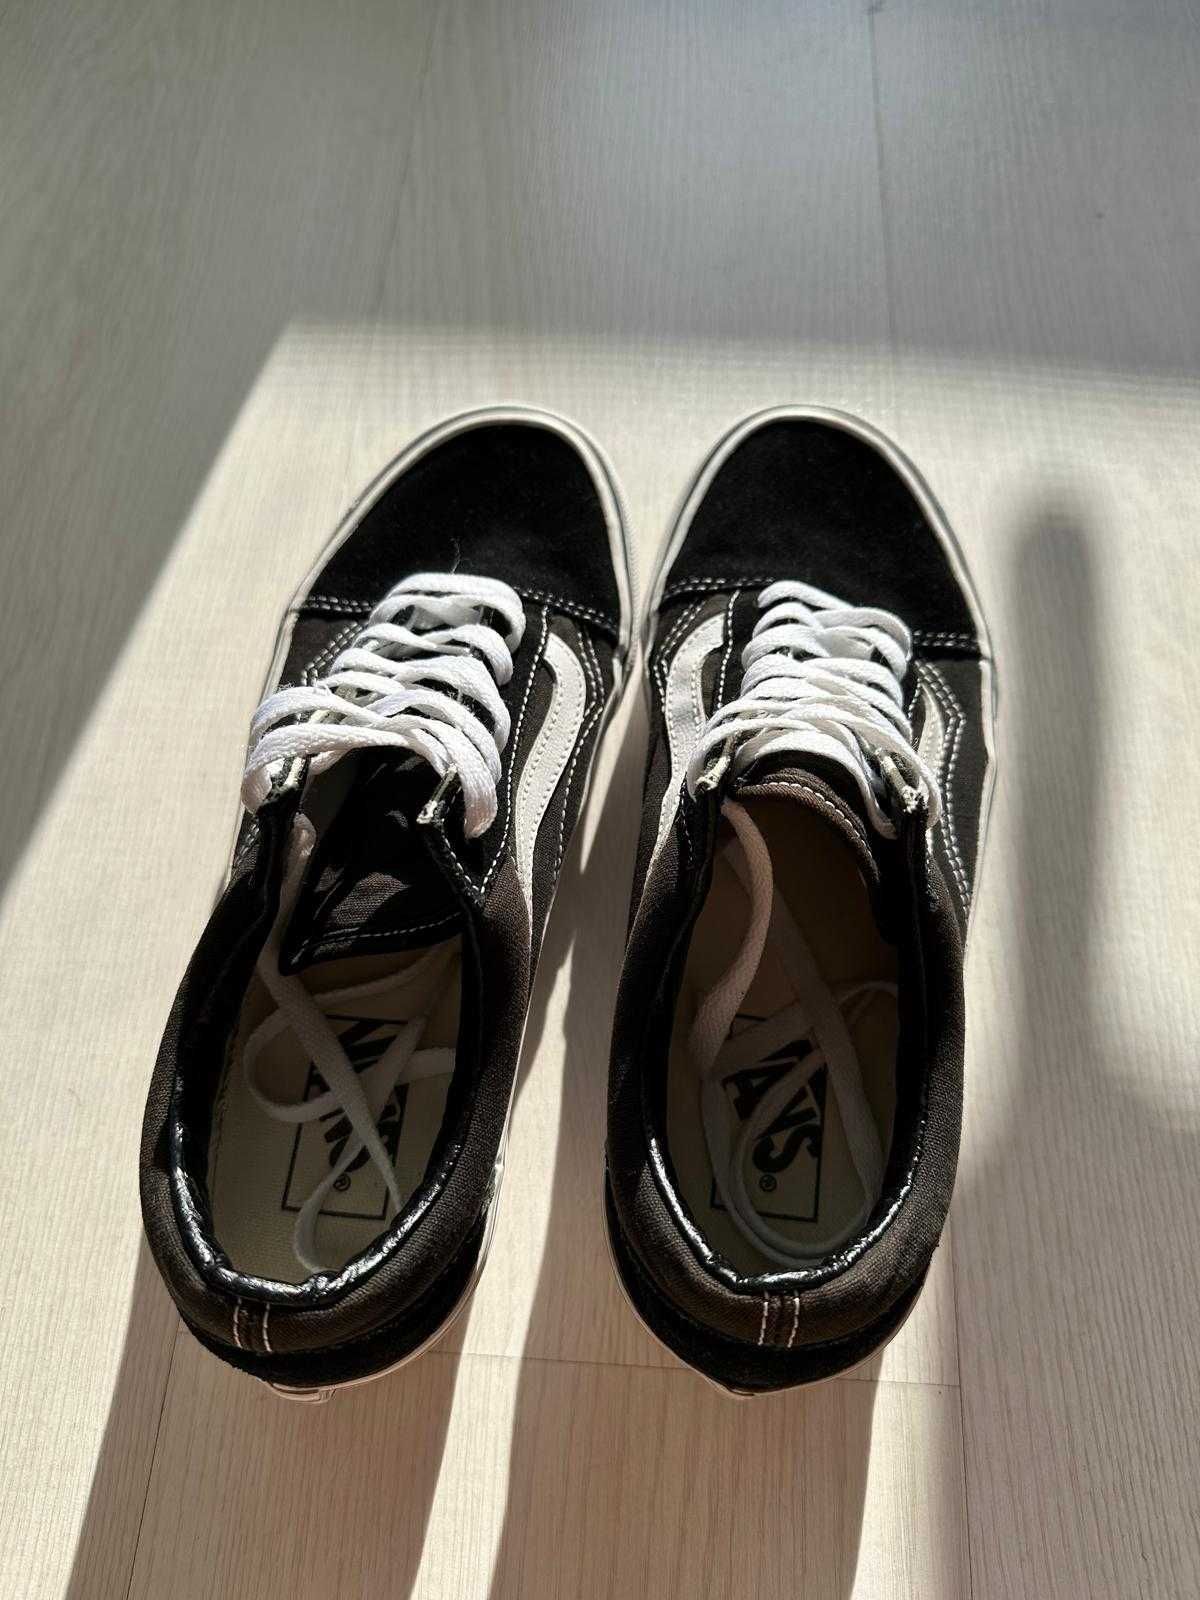 Adidasi VANS "Old Skool" negru pantofi unisex